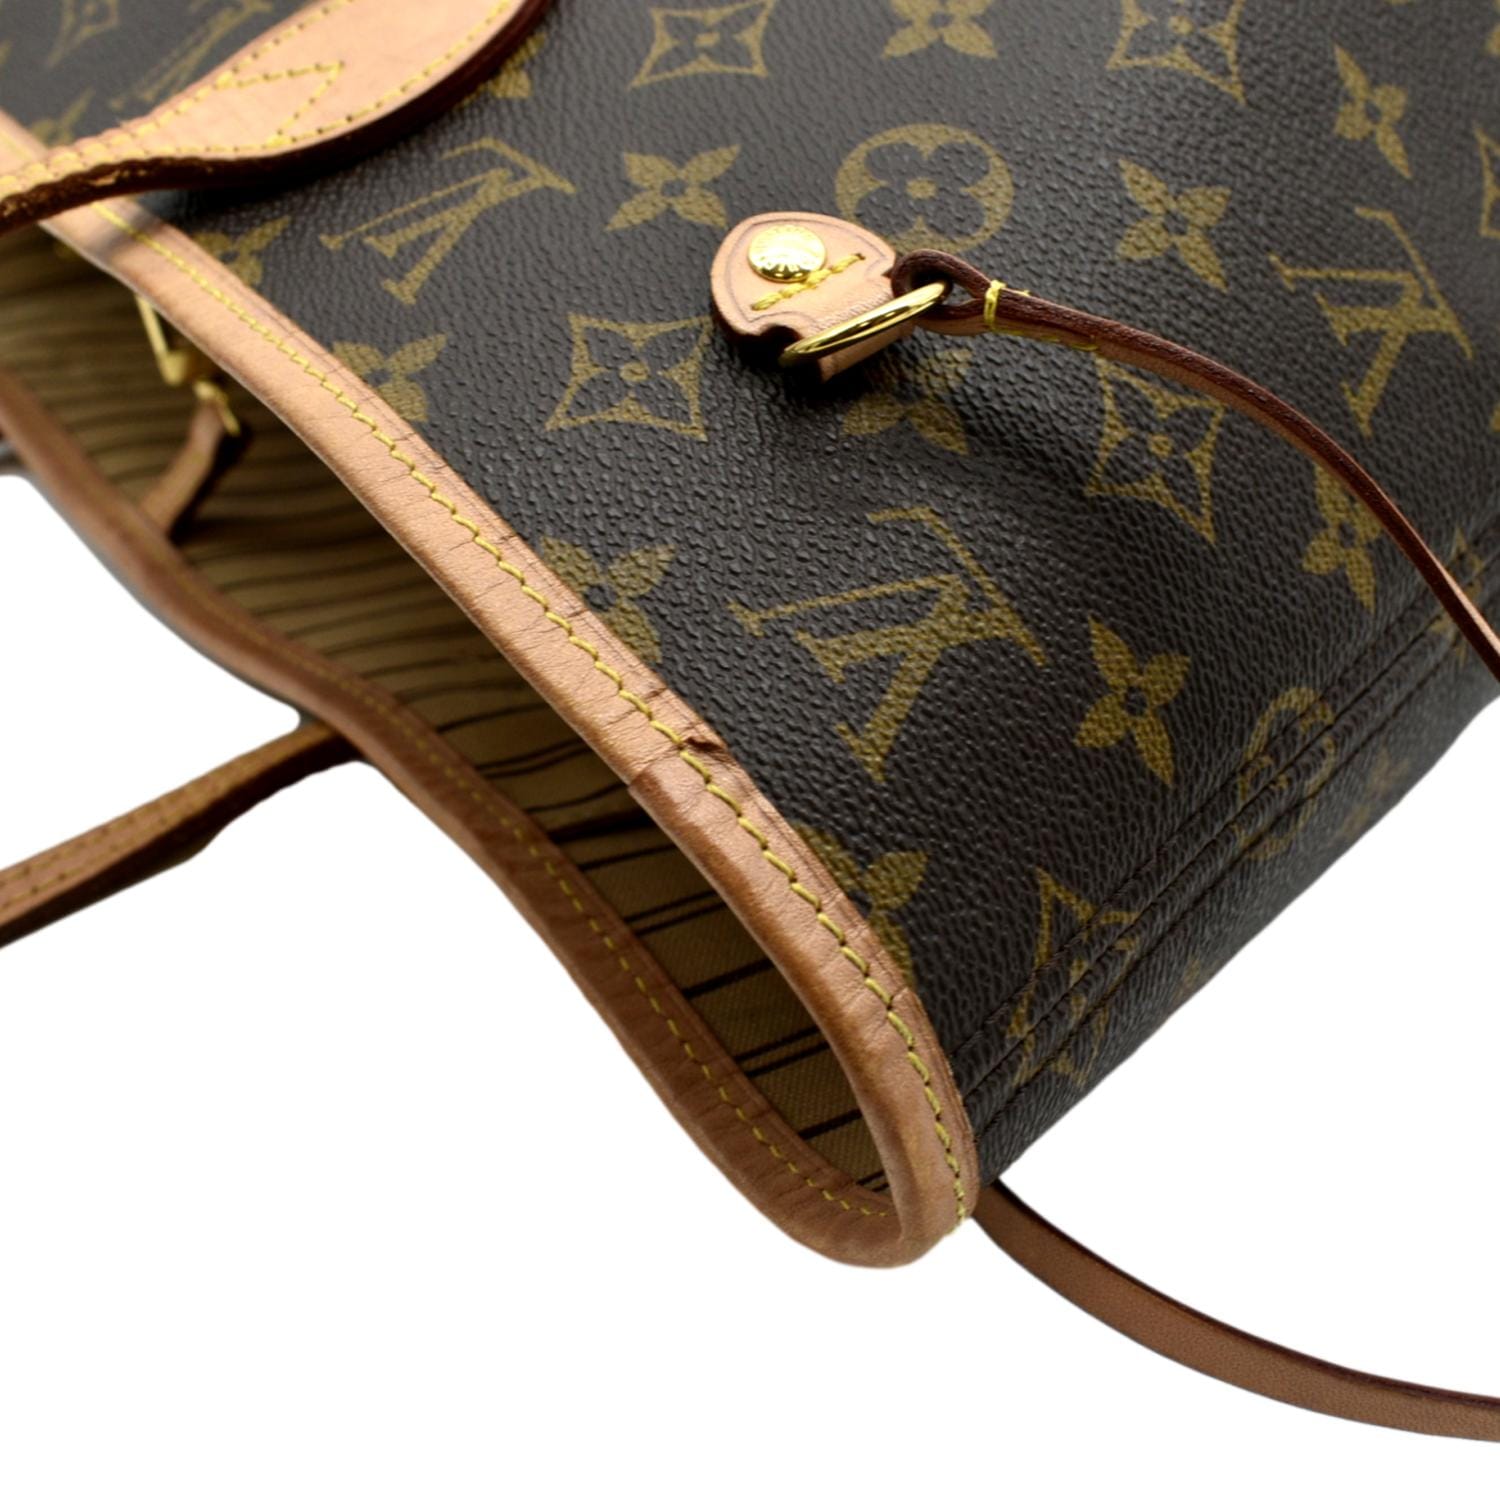 Louis Vuitton - Neverfull mm Tote Bag - Monogram Beige - Coated Canvas - Women - Luxury